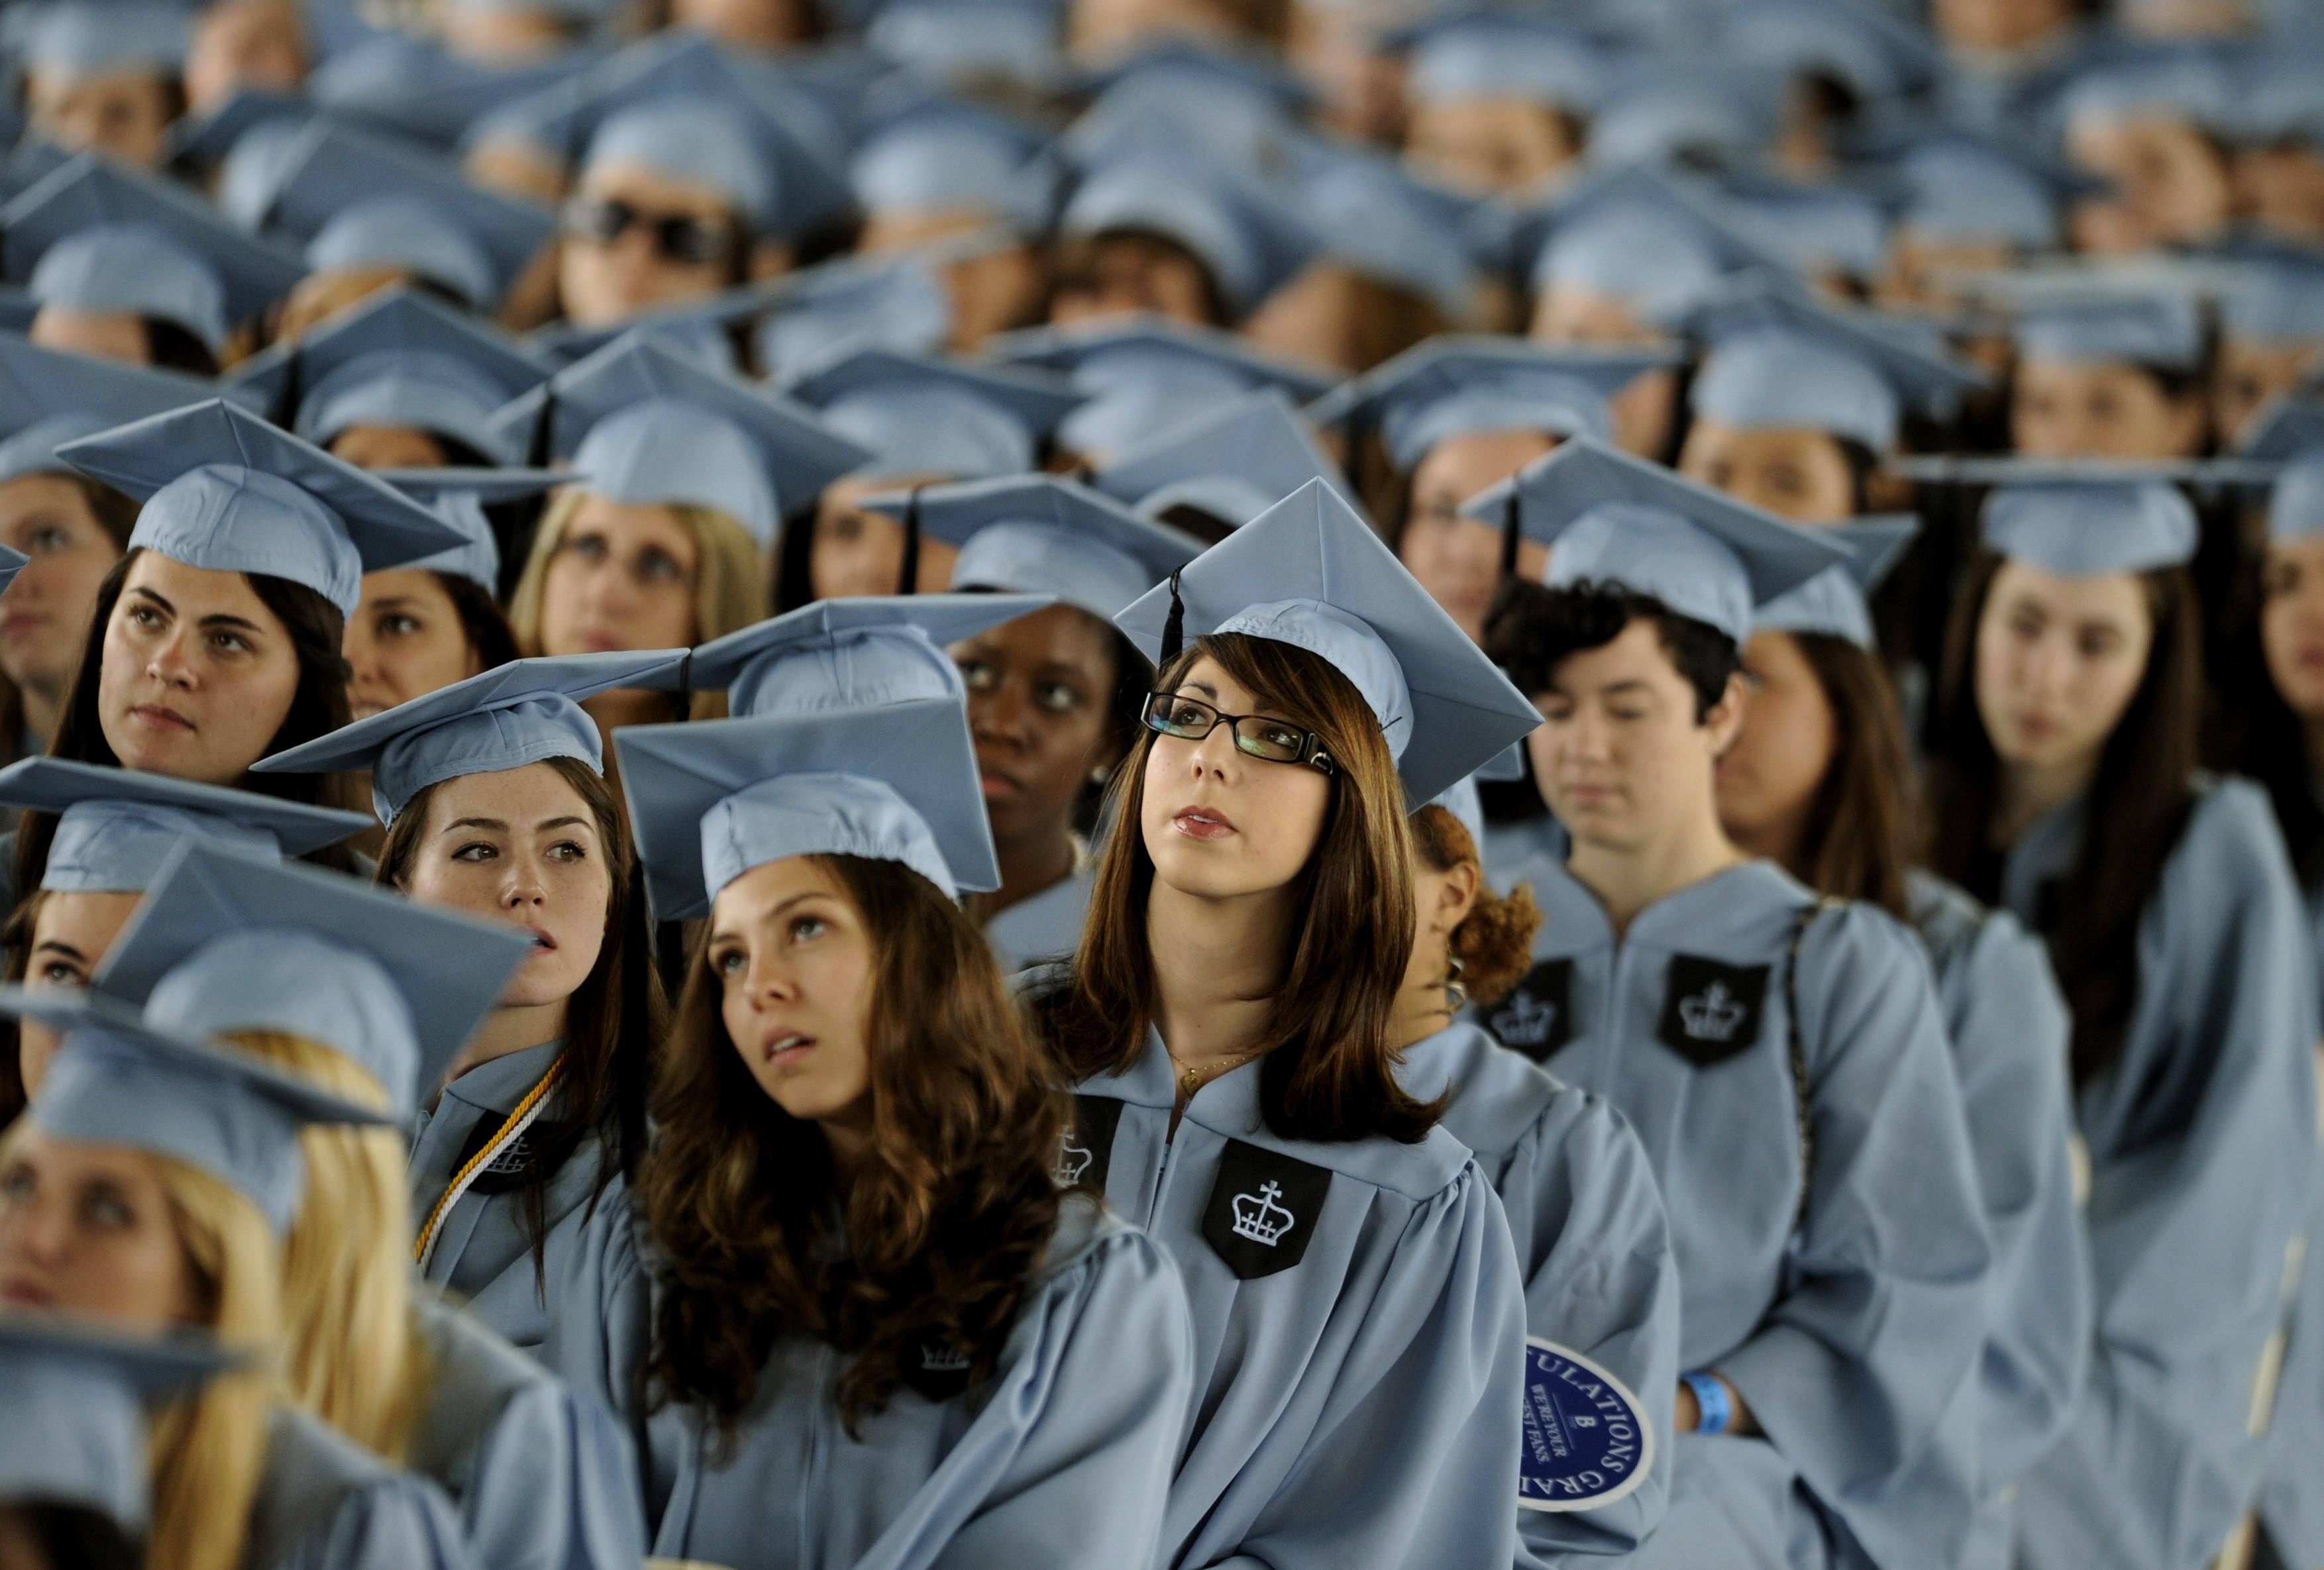 Shocking Statistics About College Graduation Rates